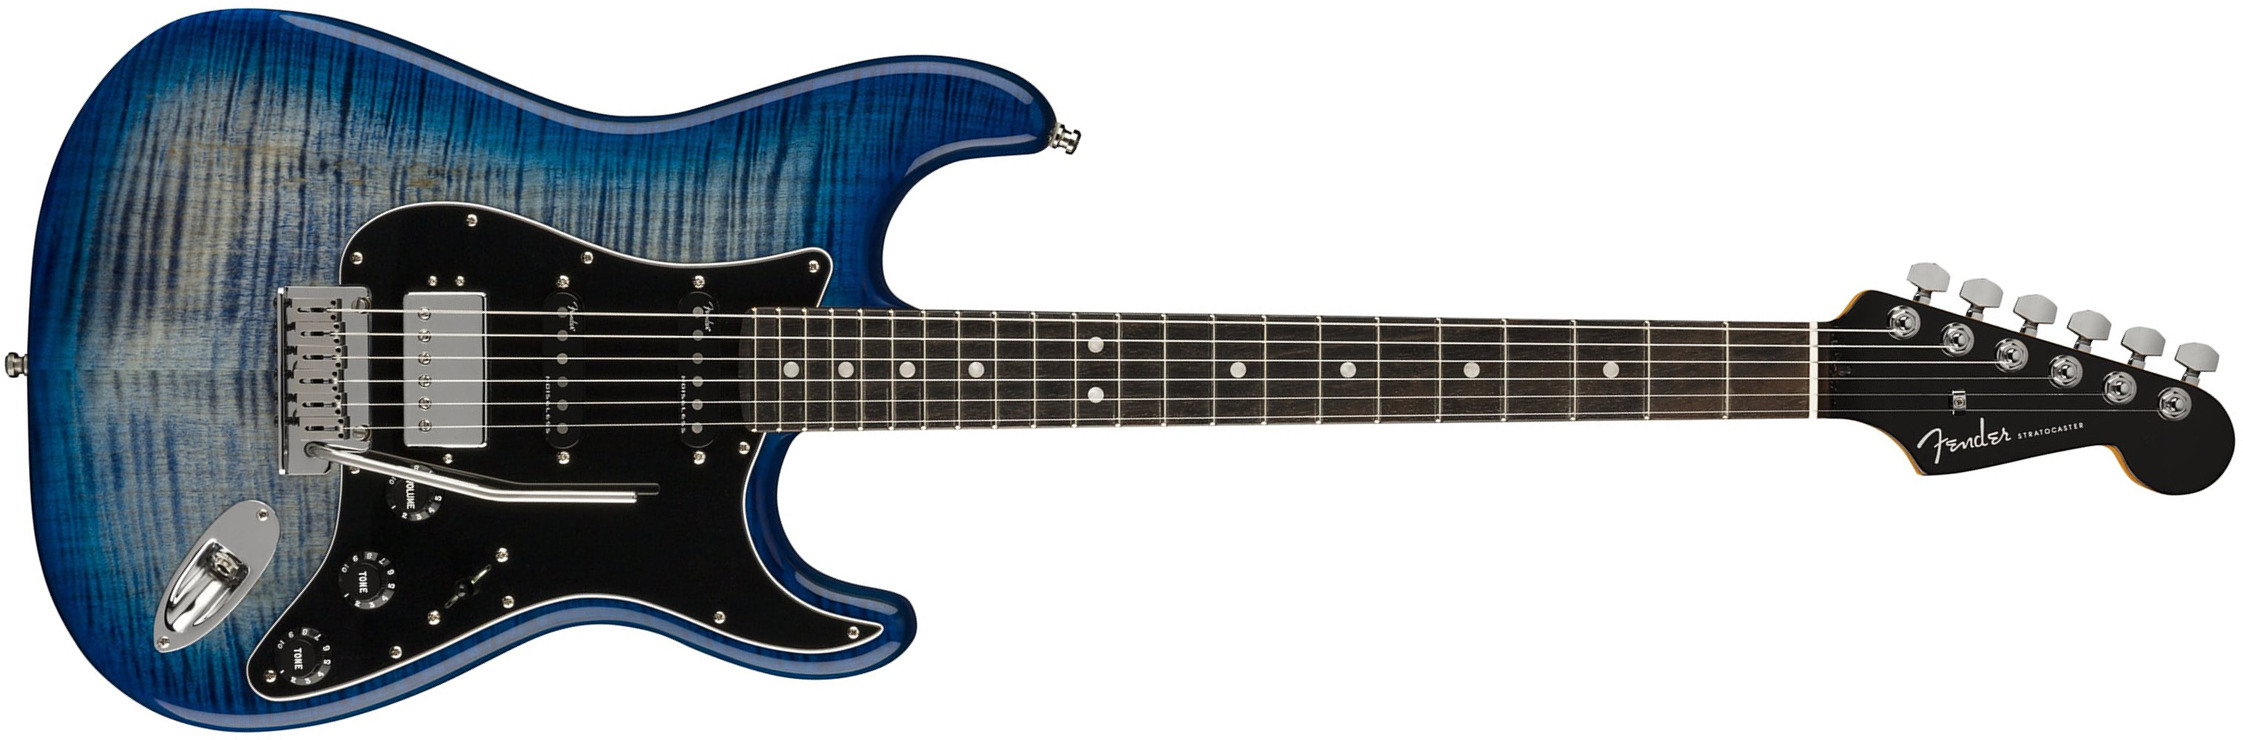 Fender Strat American Ultra Ltd Usa Hss Trem Eb - Denim Burst - Str shape electric guitar - Main picture